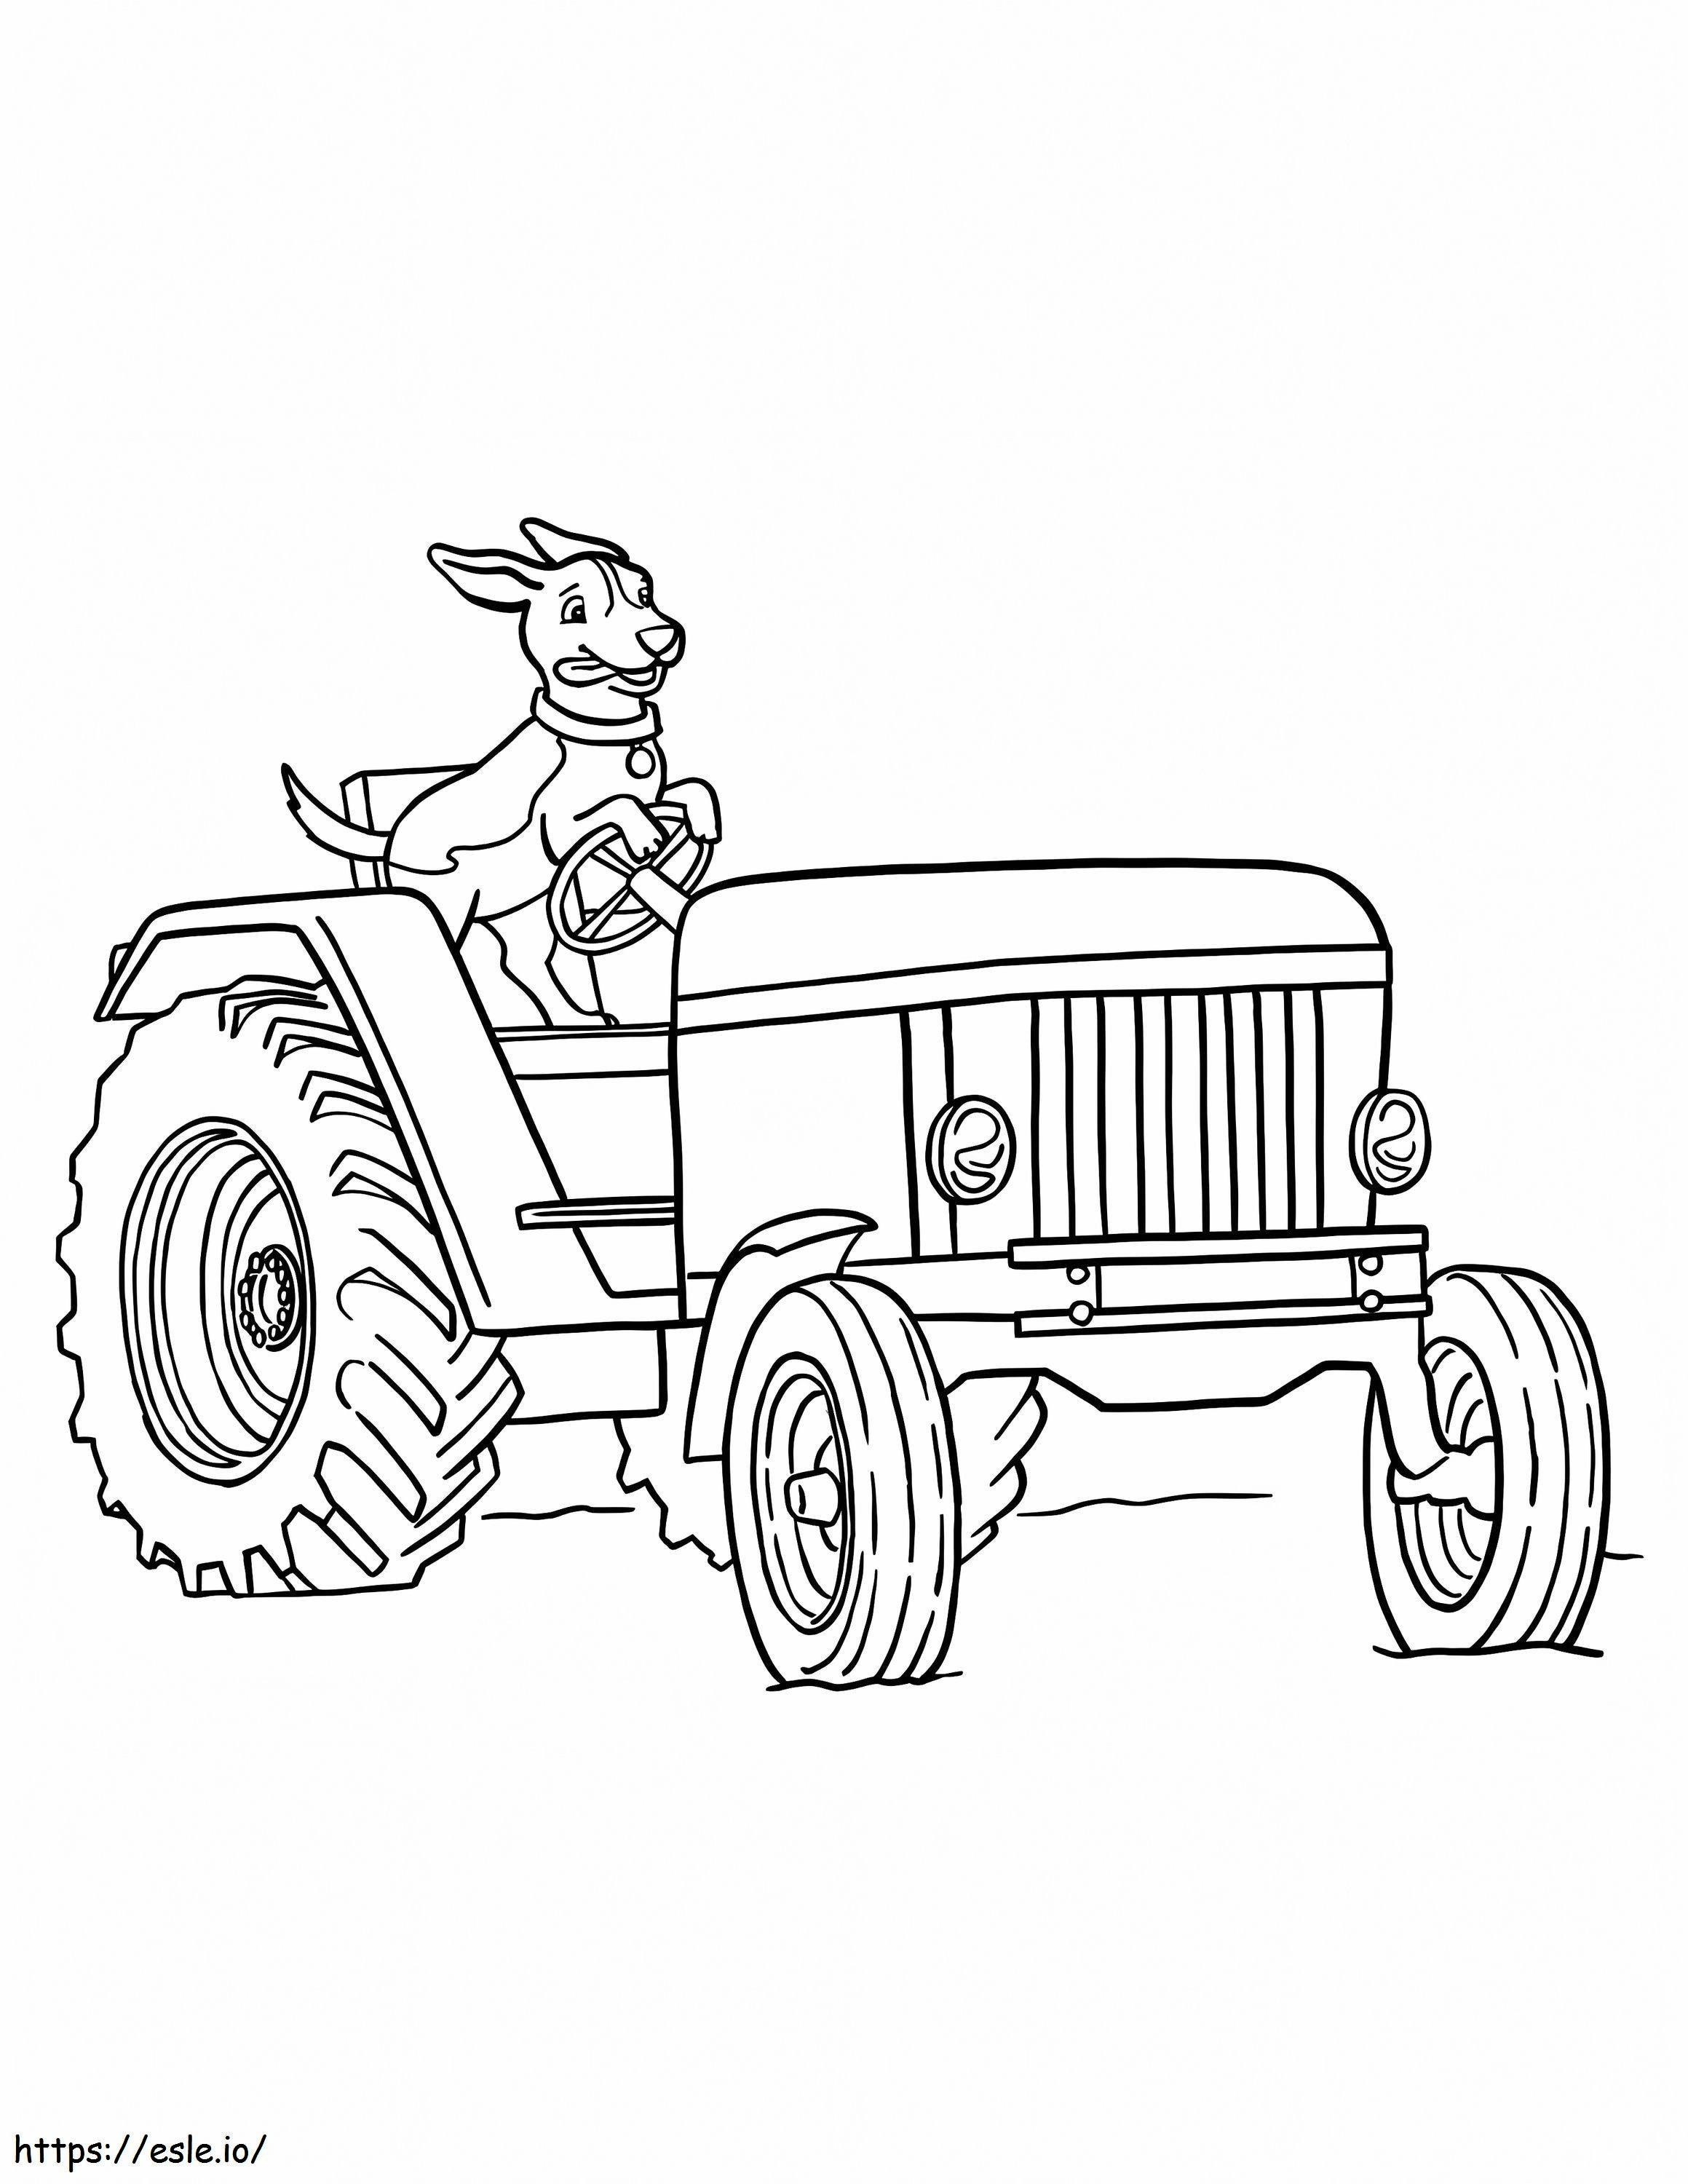 Hund fährt Traktor ausmalbilder